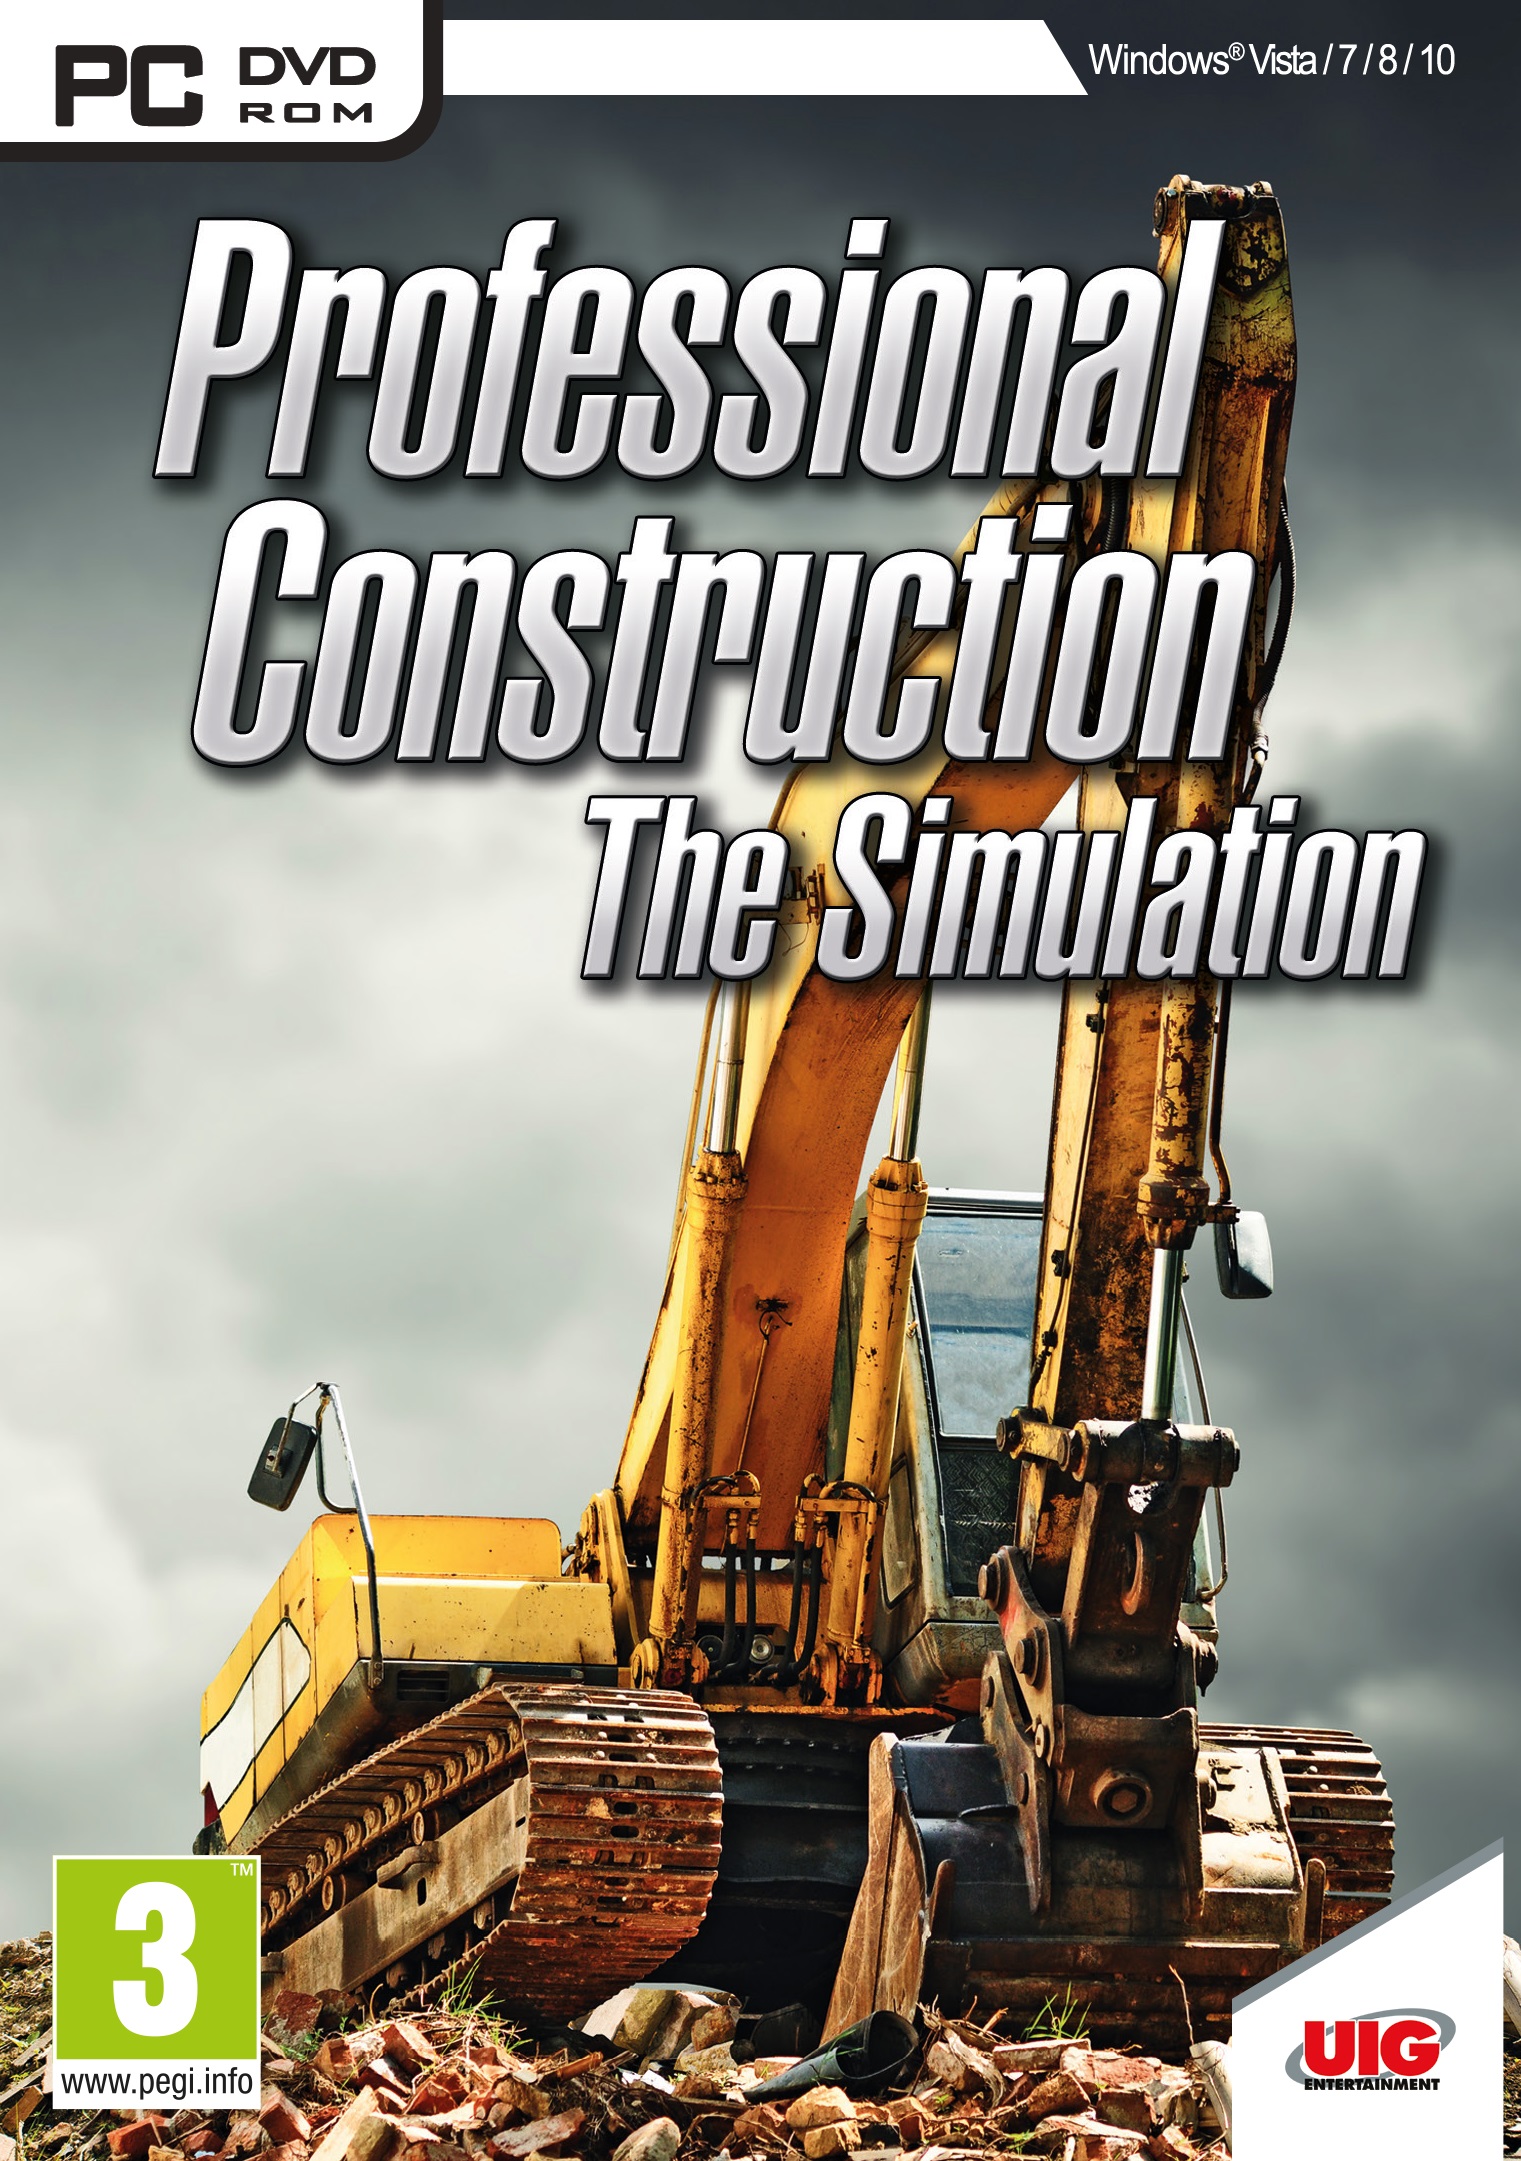 Professional Construction: The Simulation (PC), VIS-Games